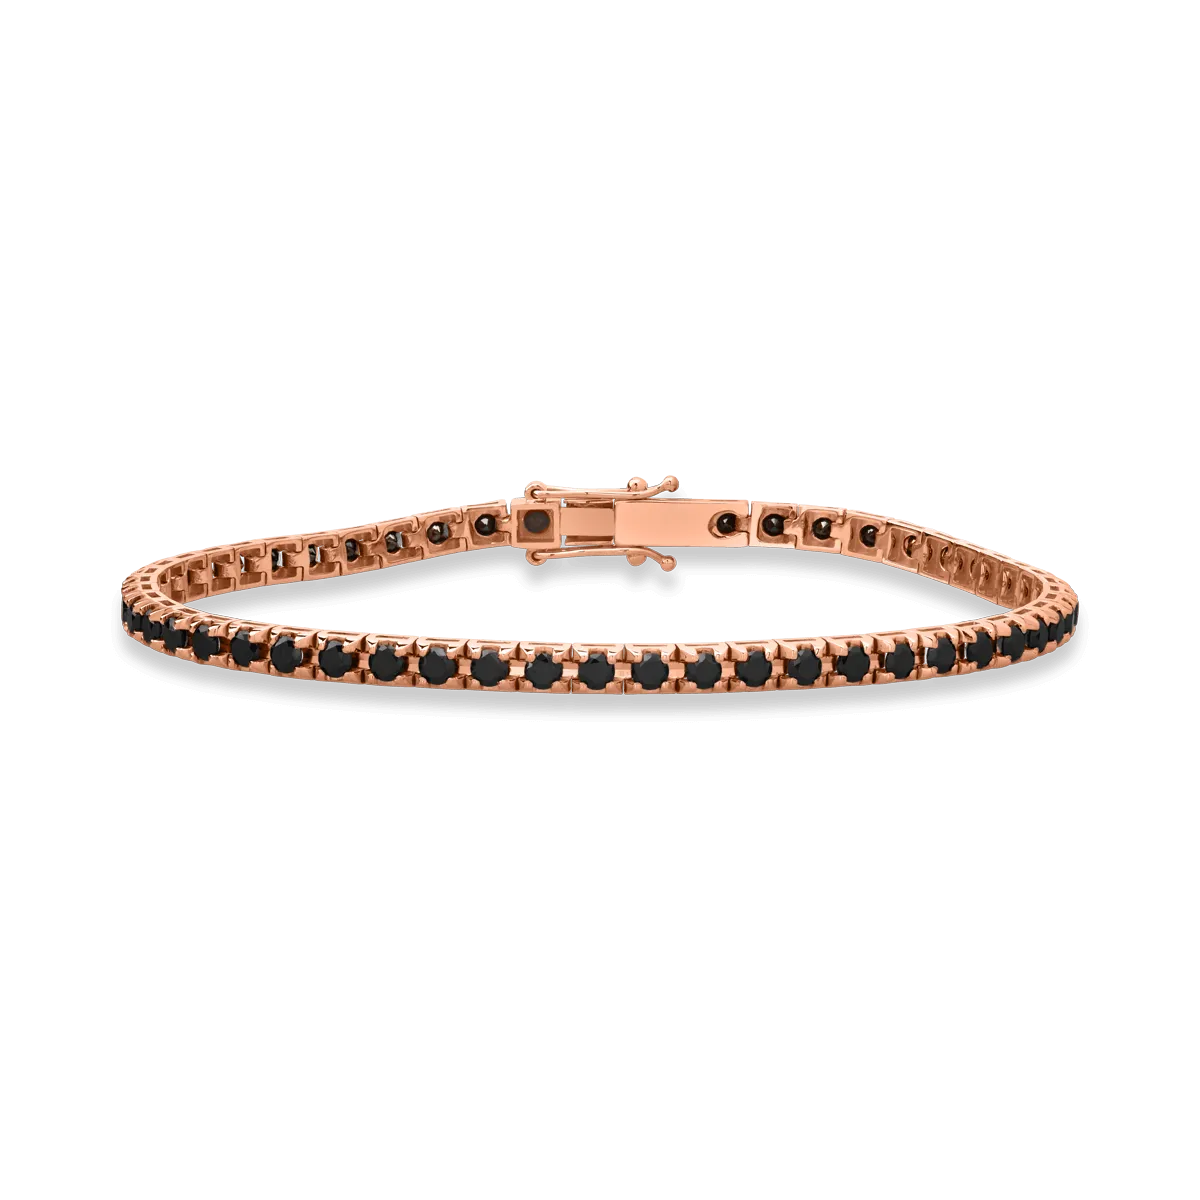 18K rose gold tennis bracelet with 2.45ct black diamonds